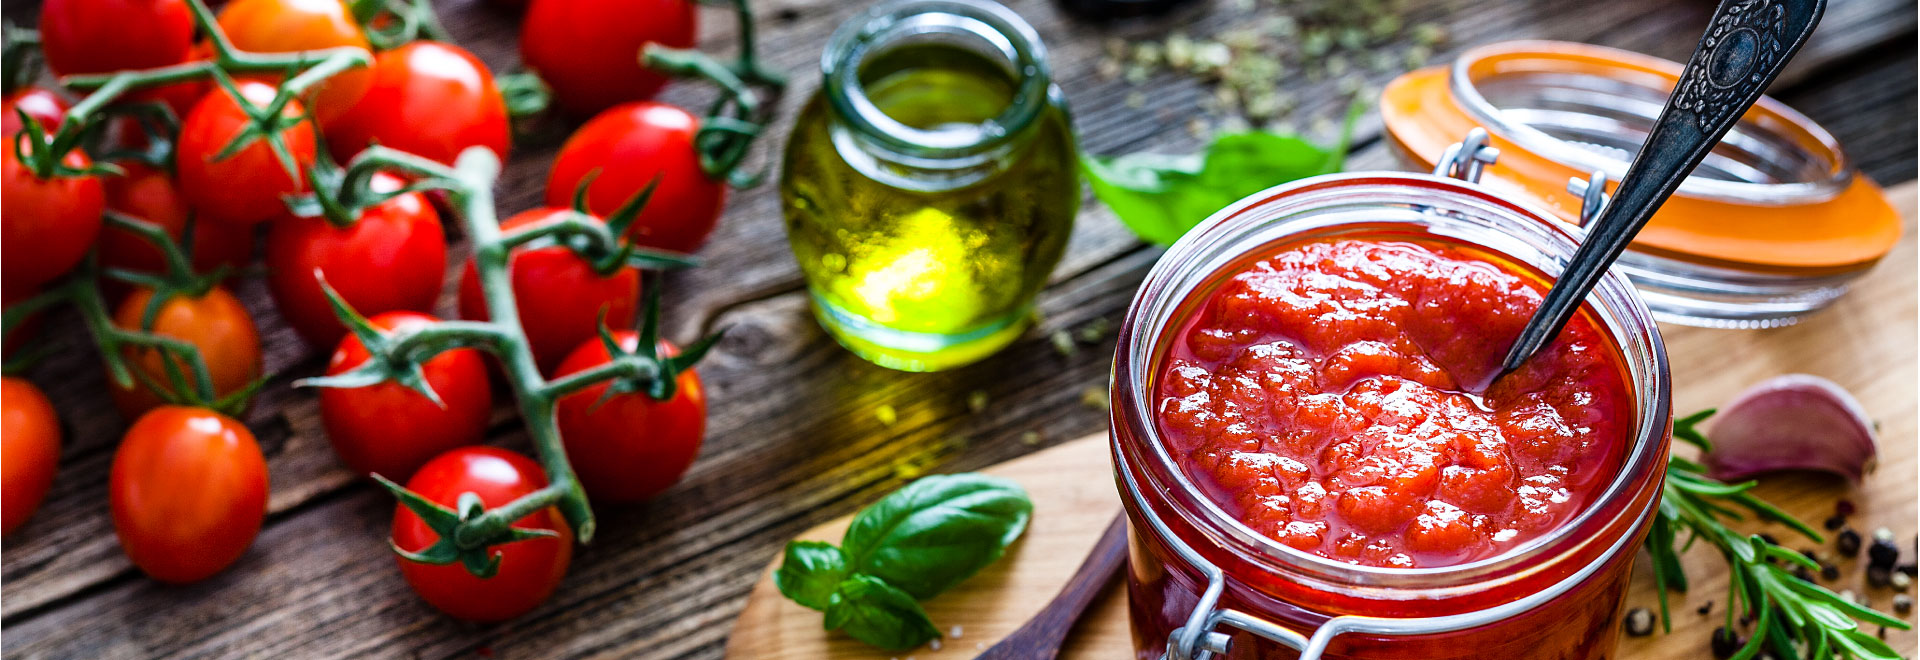 fresh-versus-cooked-tomatoes-health-benefits-recipe